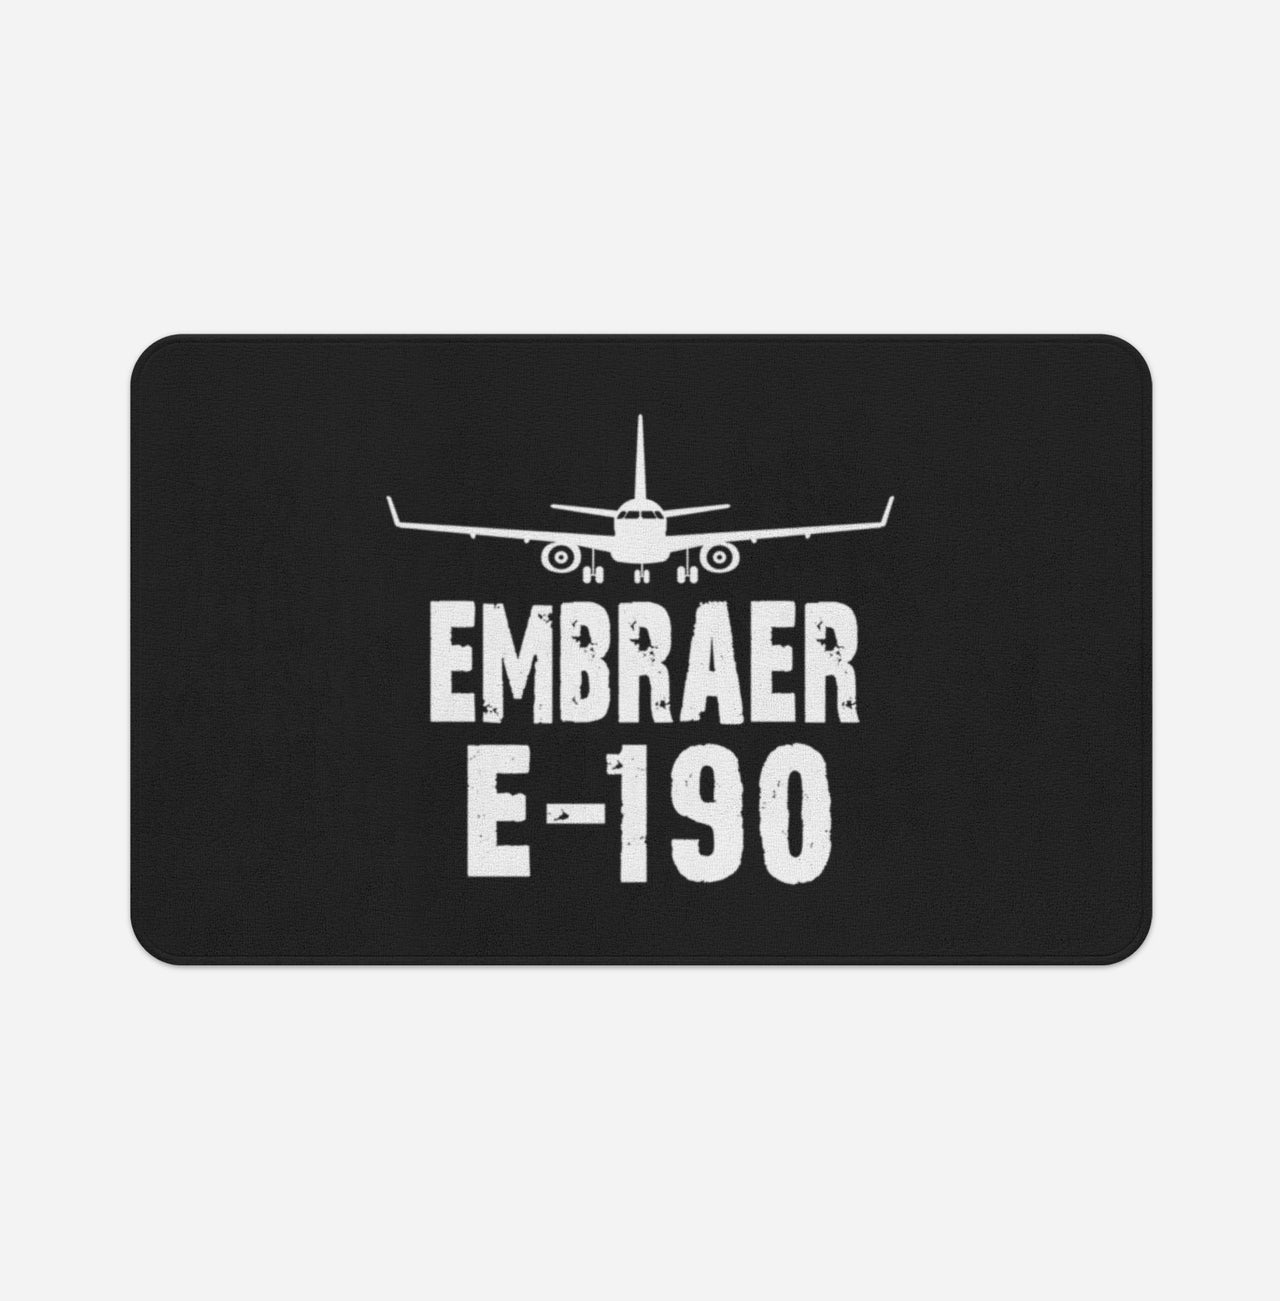 Embraer E-190 & Plane Designed Bath Mats